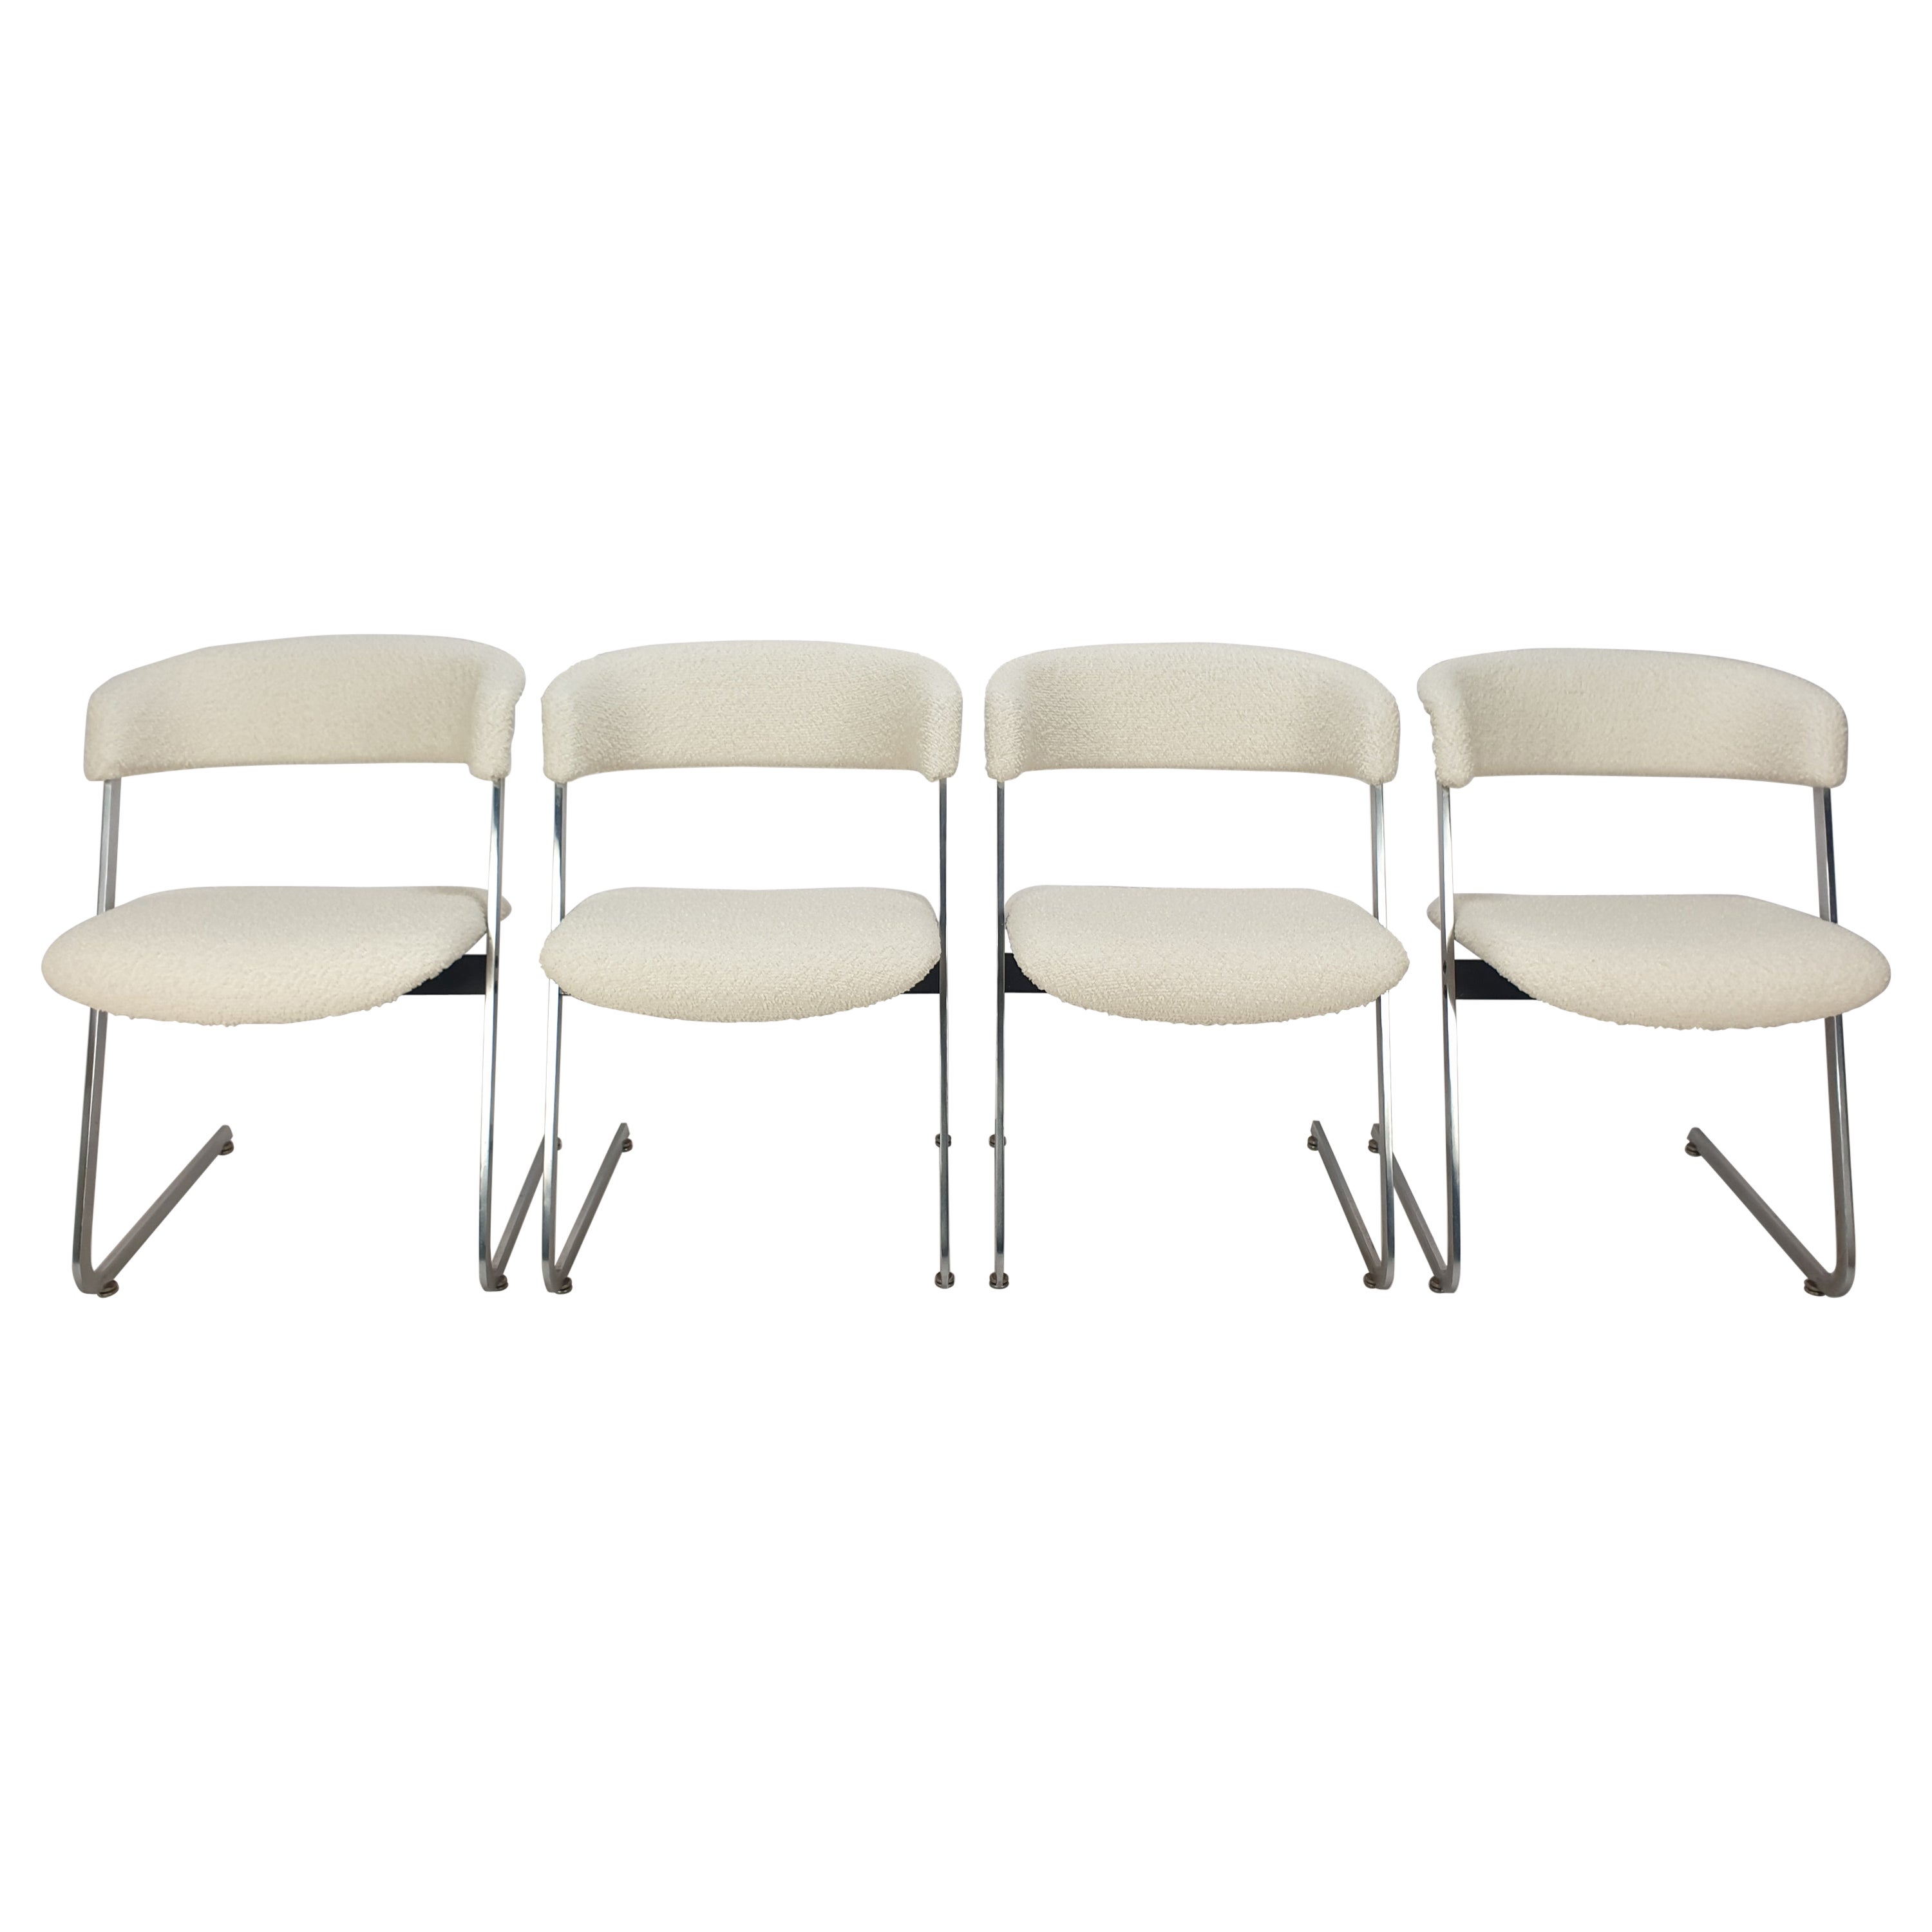 Set of 4 Italian Chairs, 1970's